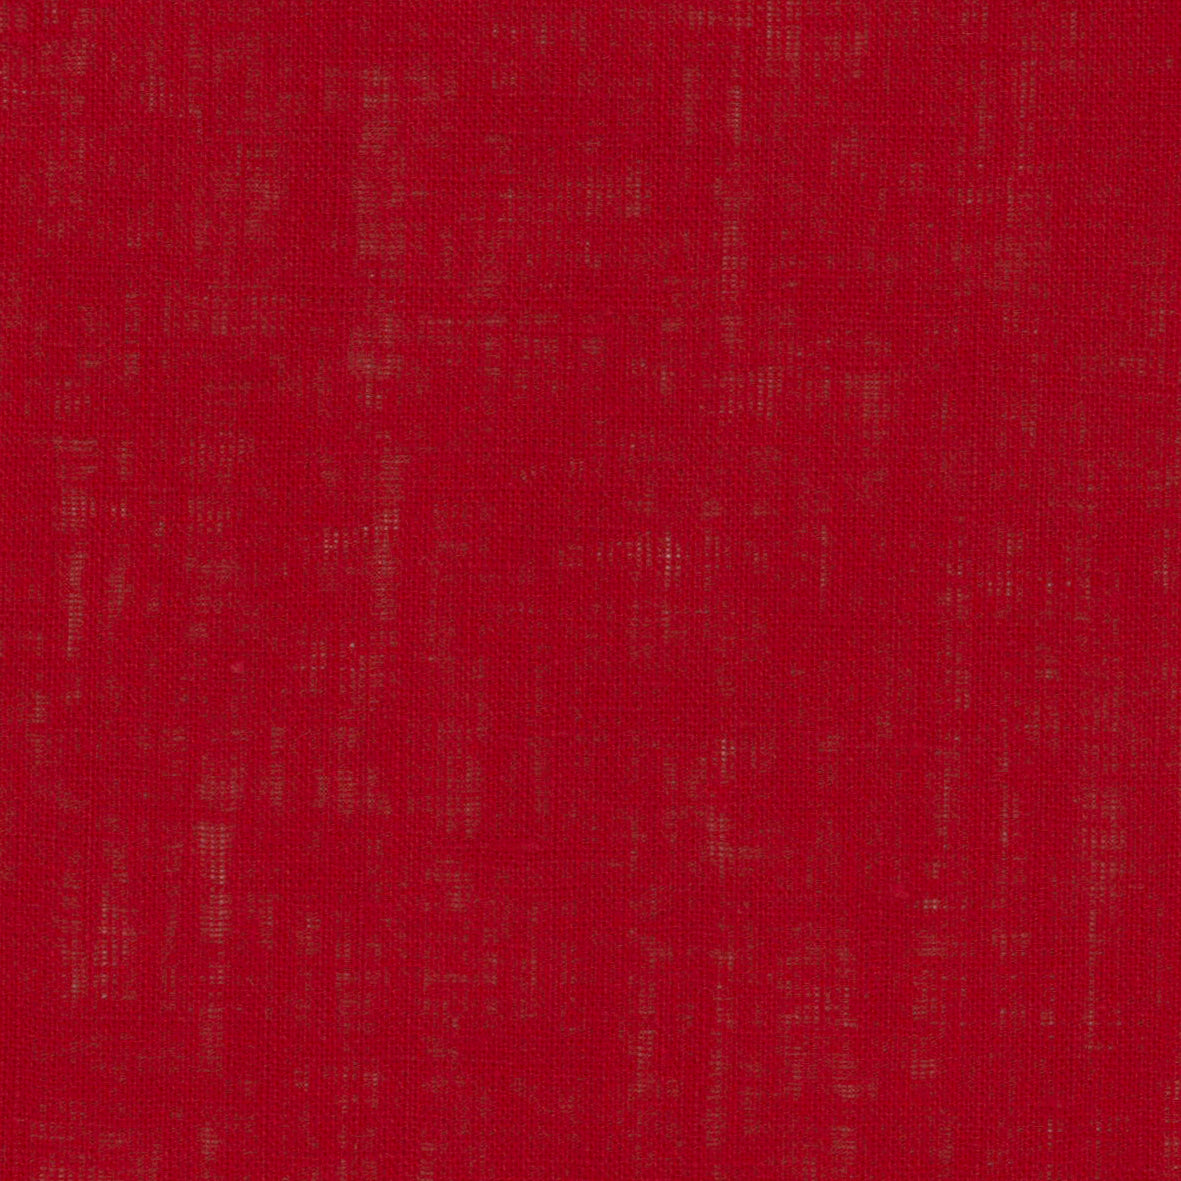 36011-04 Red Linen Plain Dyed Blend 180g.yd 53" blend linen plain dyed polyester red woven Solid Color - knit fabric - woven fabric - fabric company - fabric wholesale - fabric b2b - fabric factory - high quality fabric - hong kong fabric - fabric hk - acetate fabric - cotton fabric - linen fabric - metallic fabric - nylon fabric - polyester fabric - spandex fabric - chun wing hing - cwh hk - fabric worldwide ship - 針織布 - 梳織布 - 布料公司- 布料批發 - 香港布料 - 秦榮興